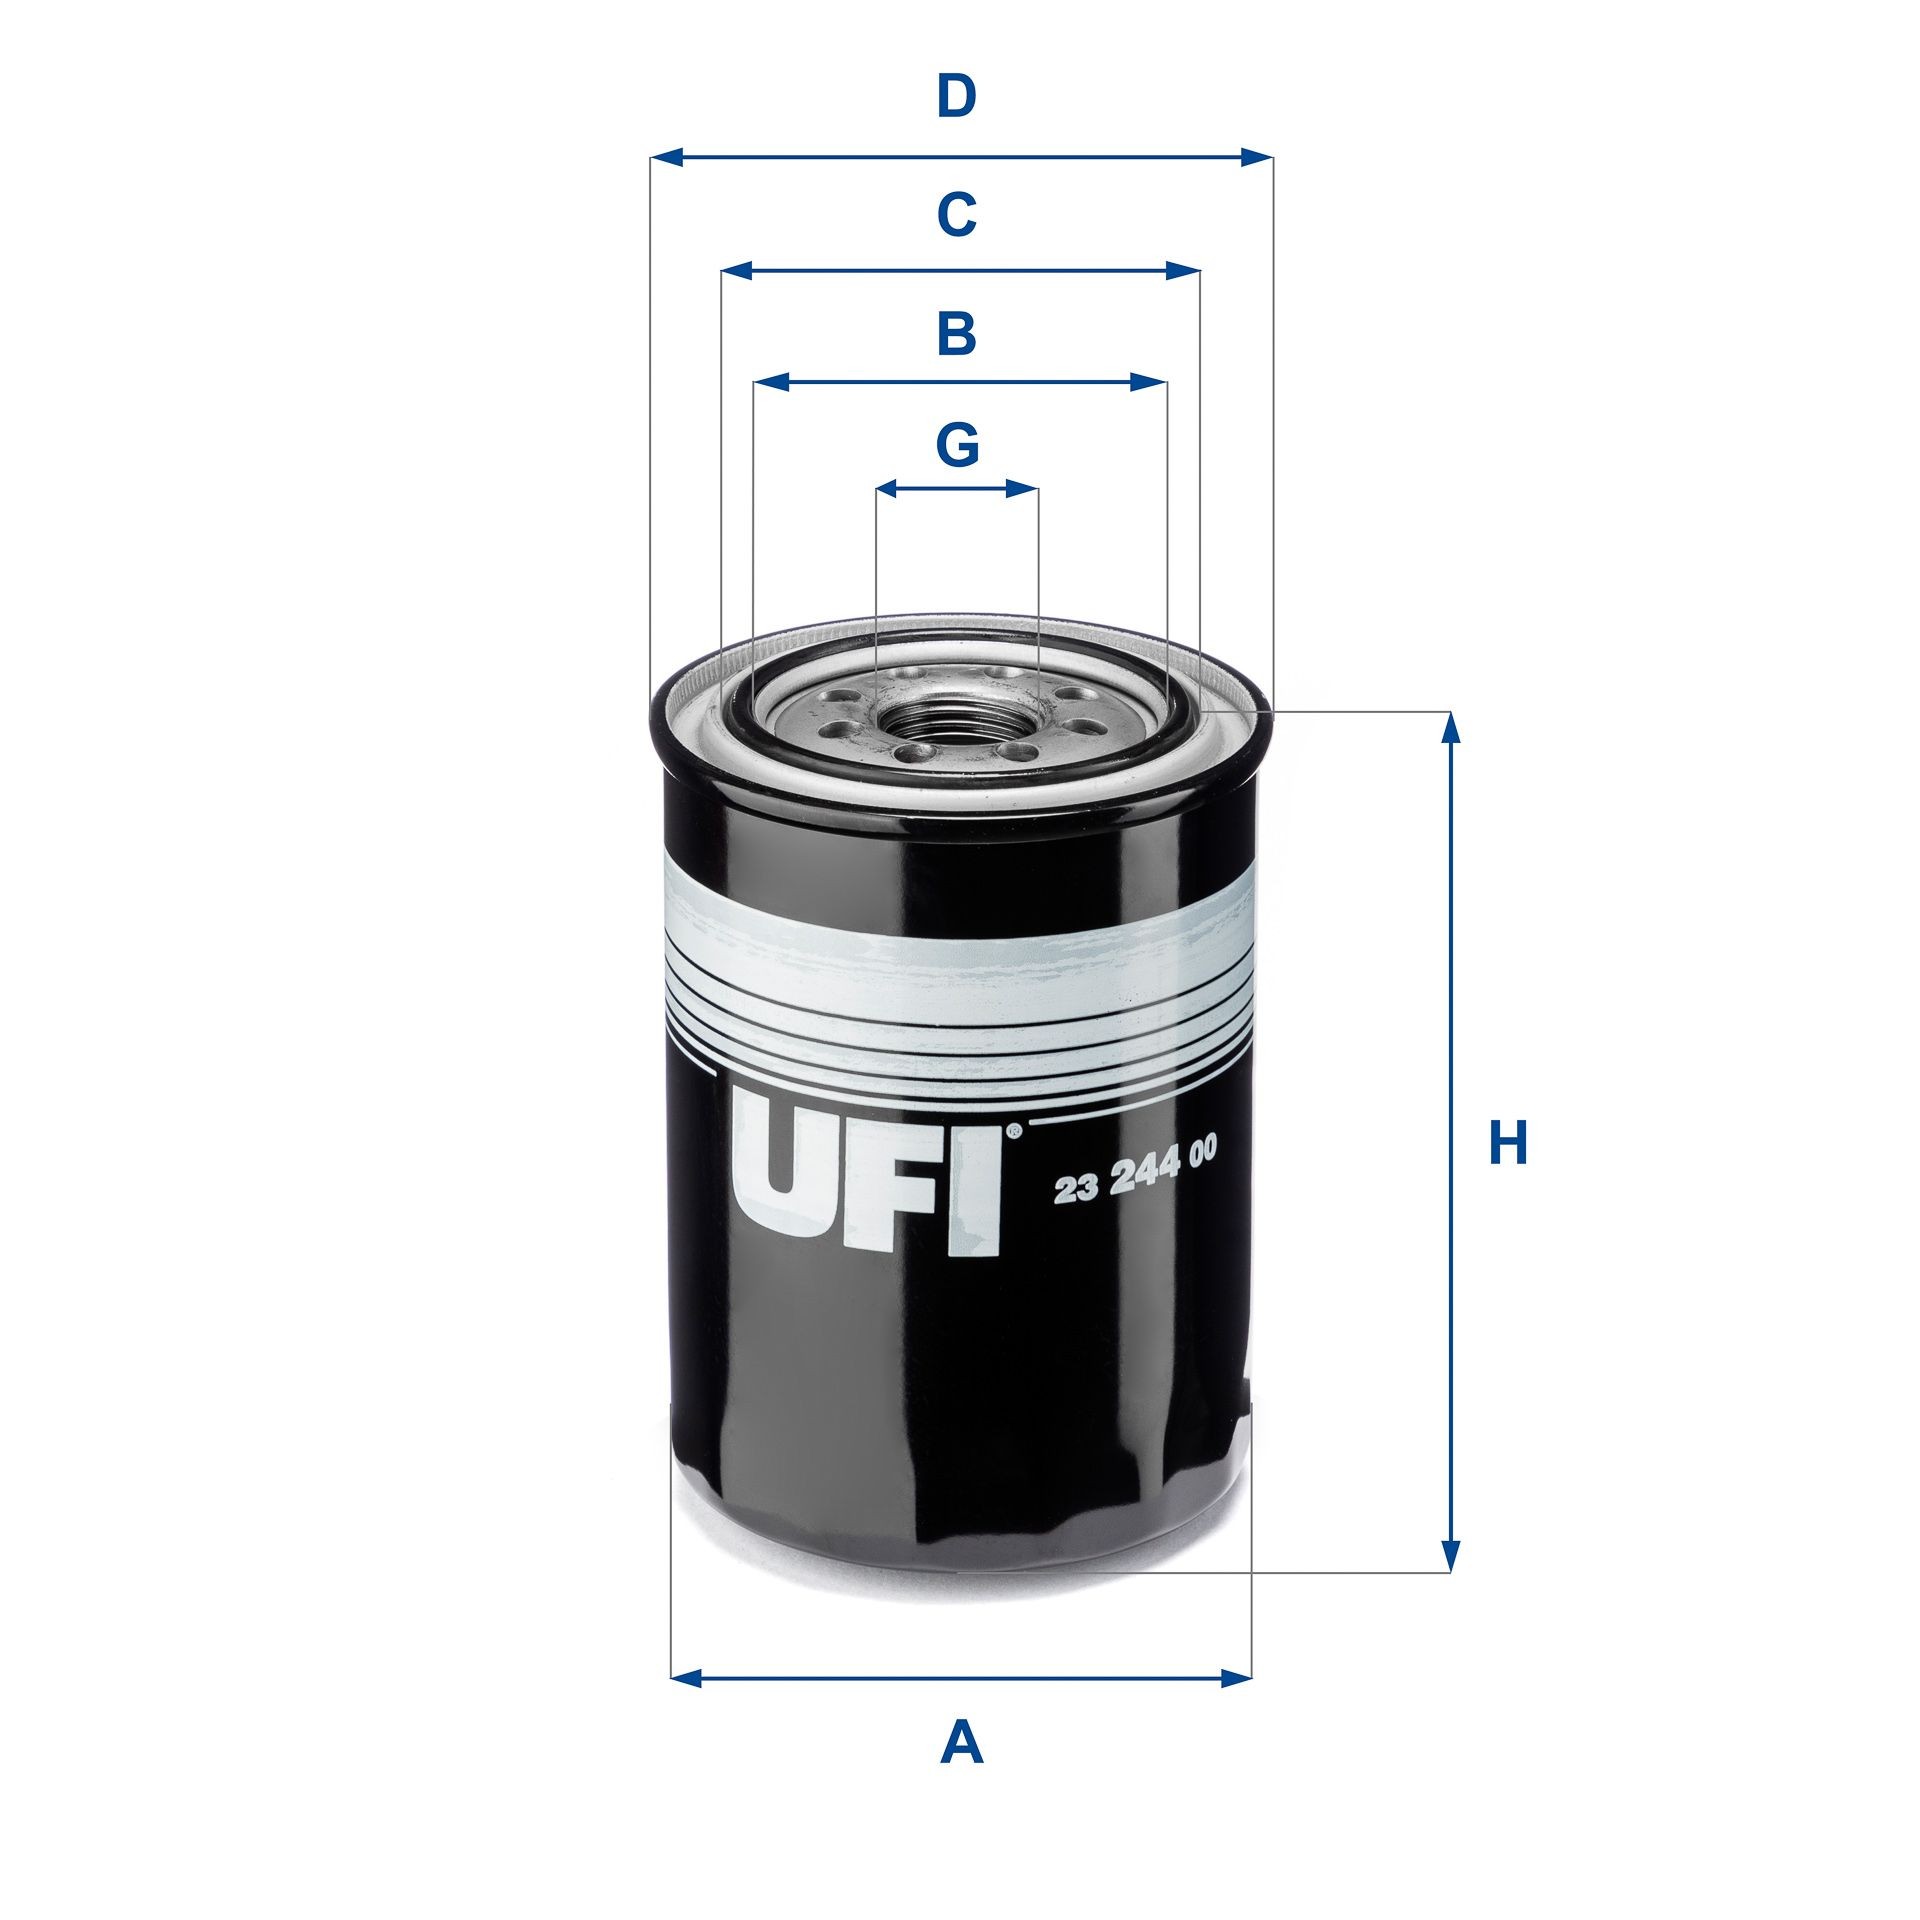 Original UFI Oil filters 23.244.00 for NISSAN SUNNY